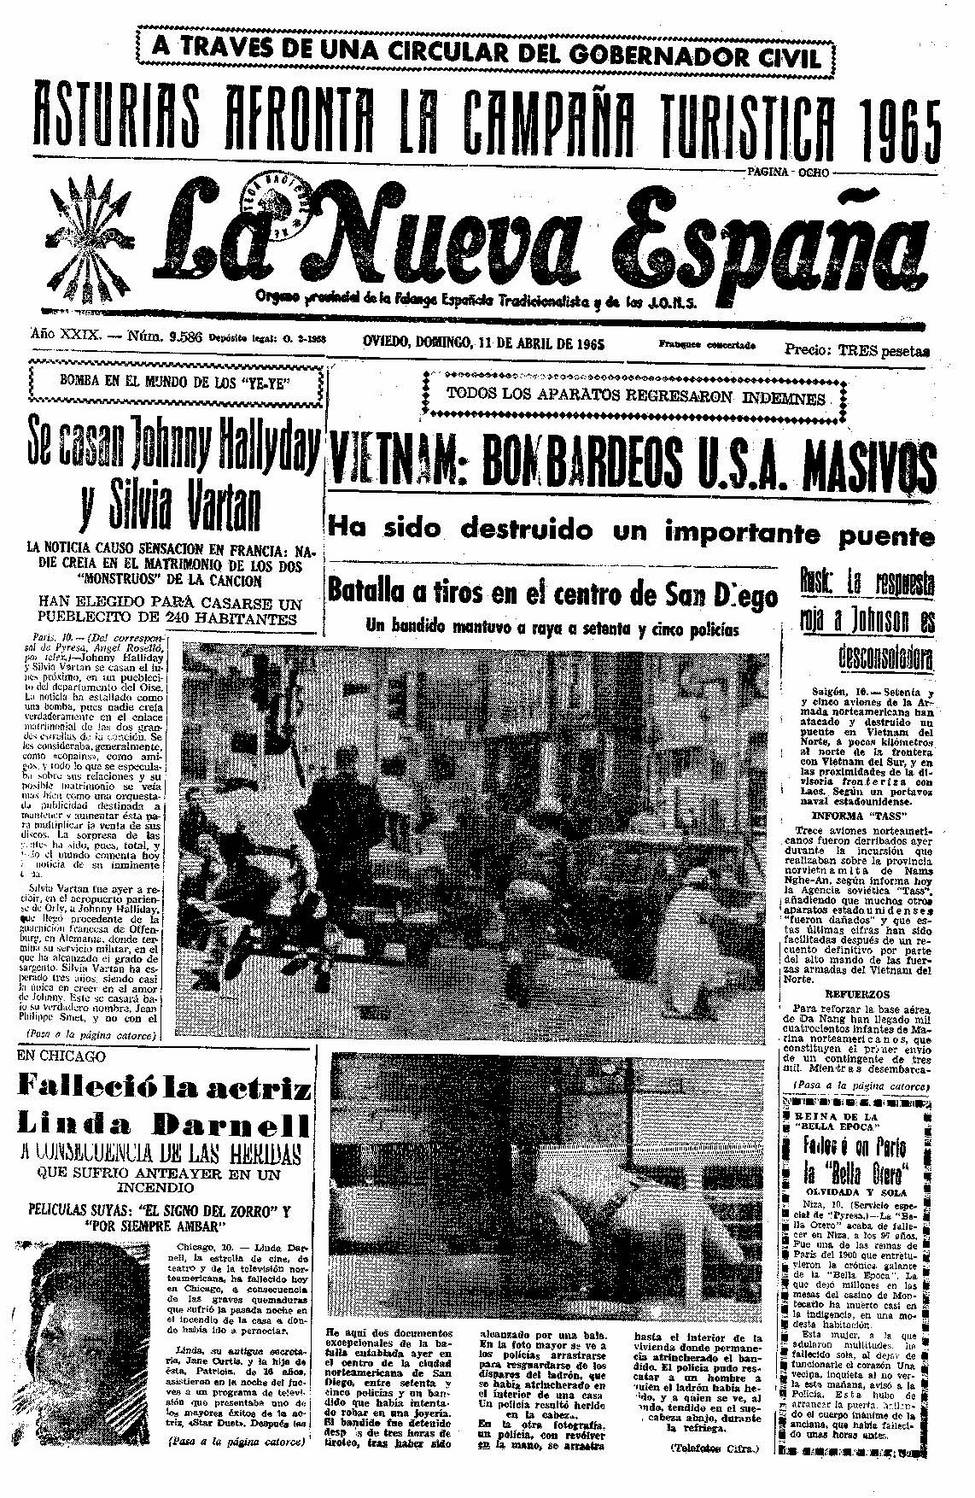 Portada del Domingo, 11 de Abril de 1965